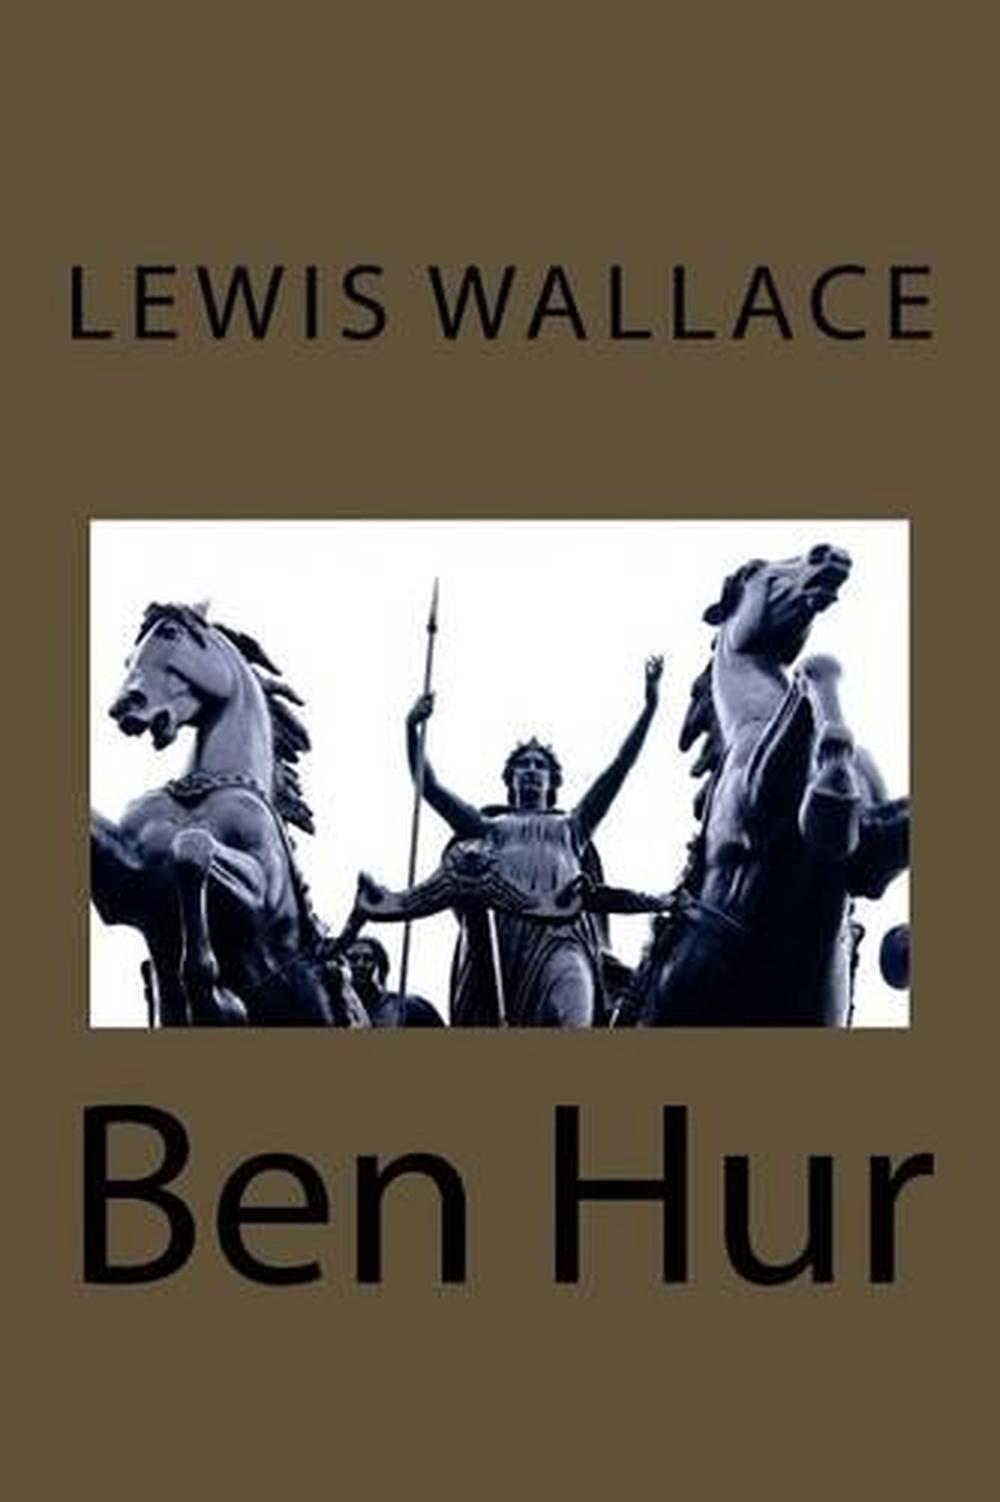 ben hur a tale of the christ book